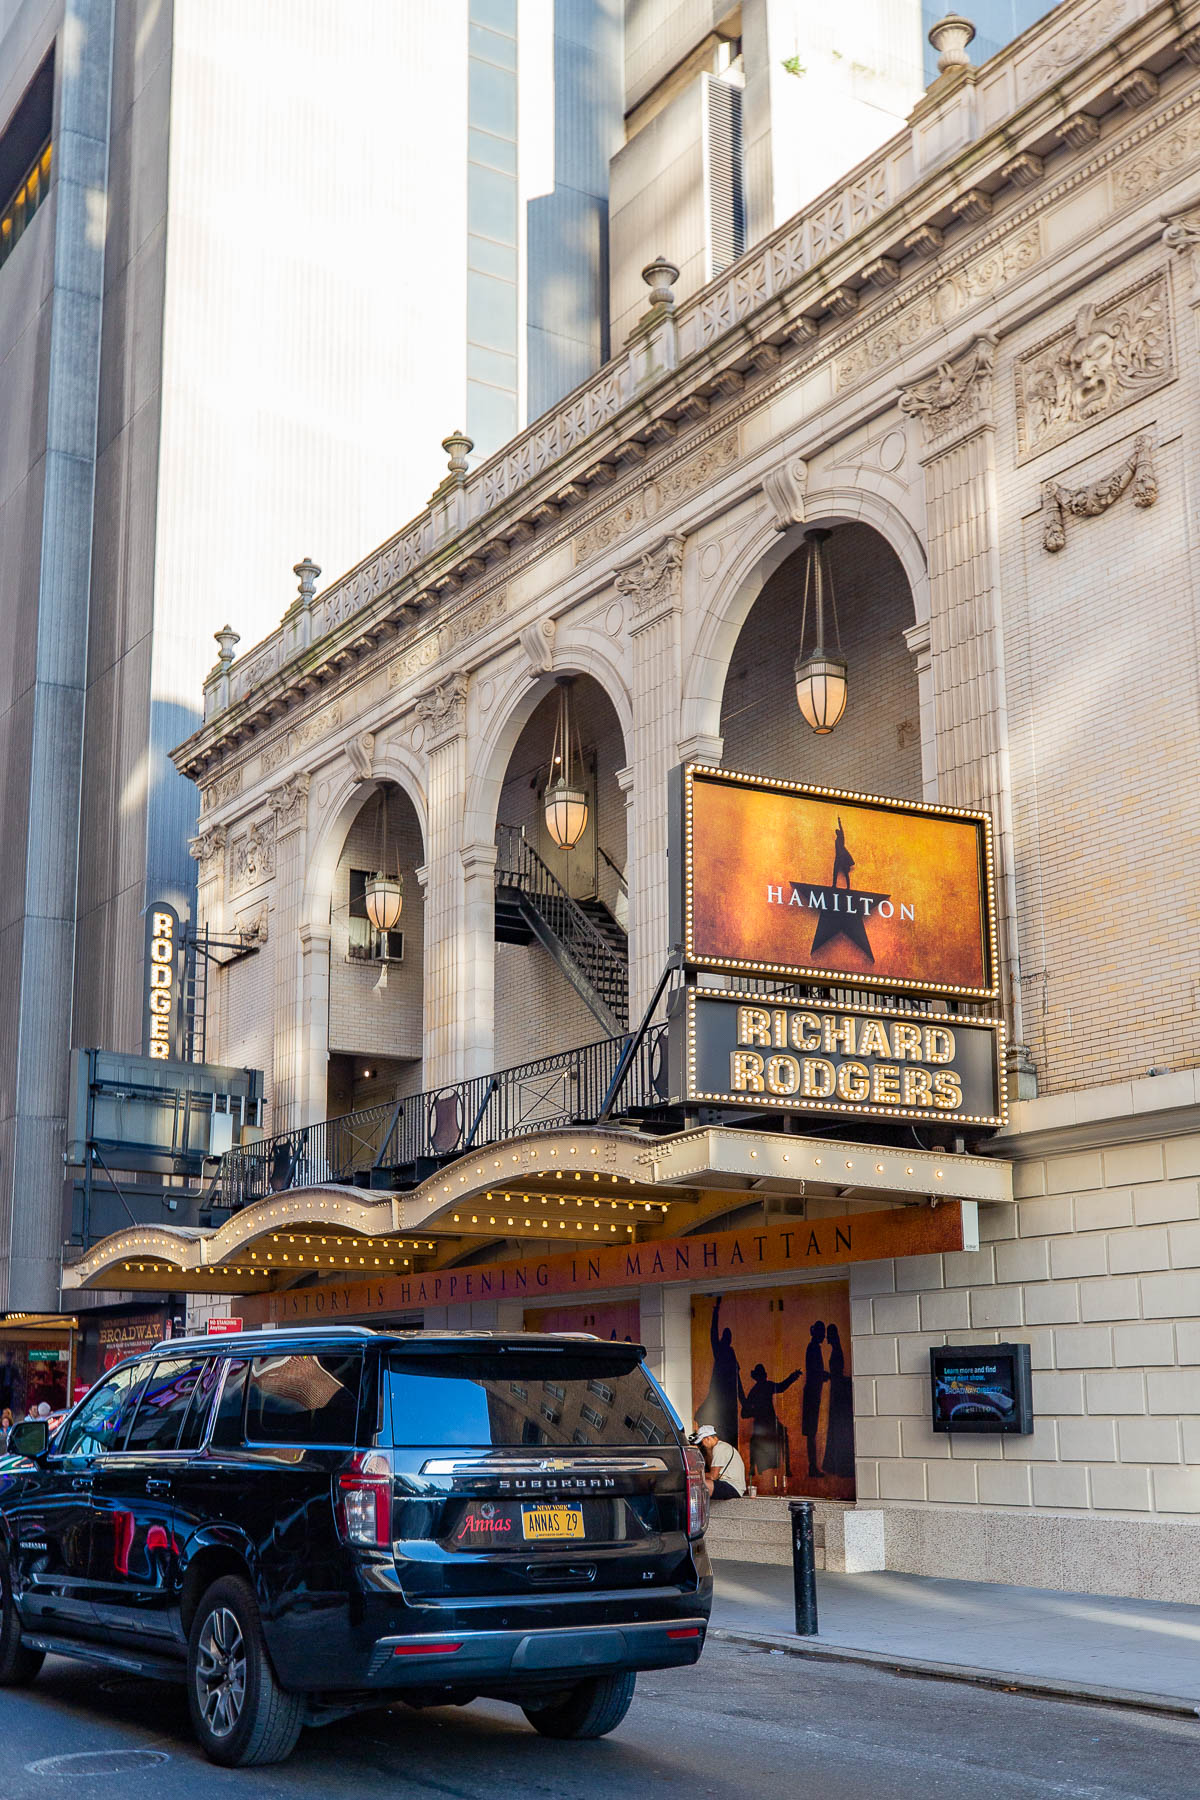 Hamilton at the Richard Rodgers Theater